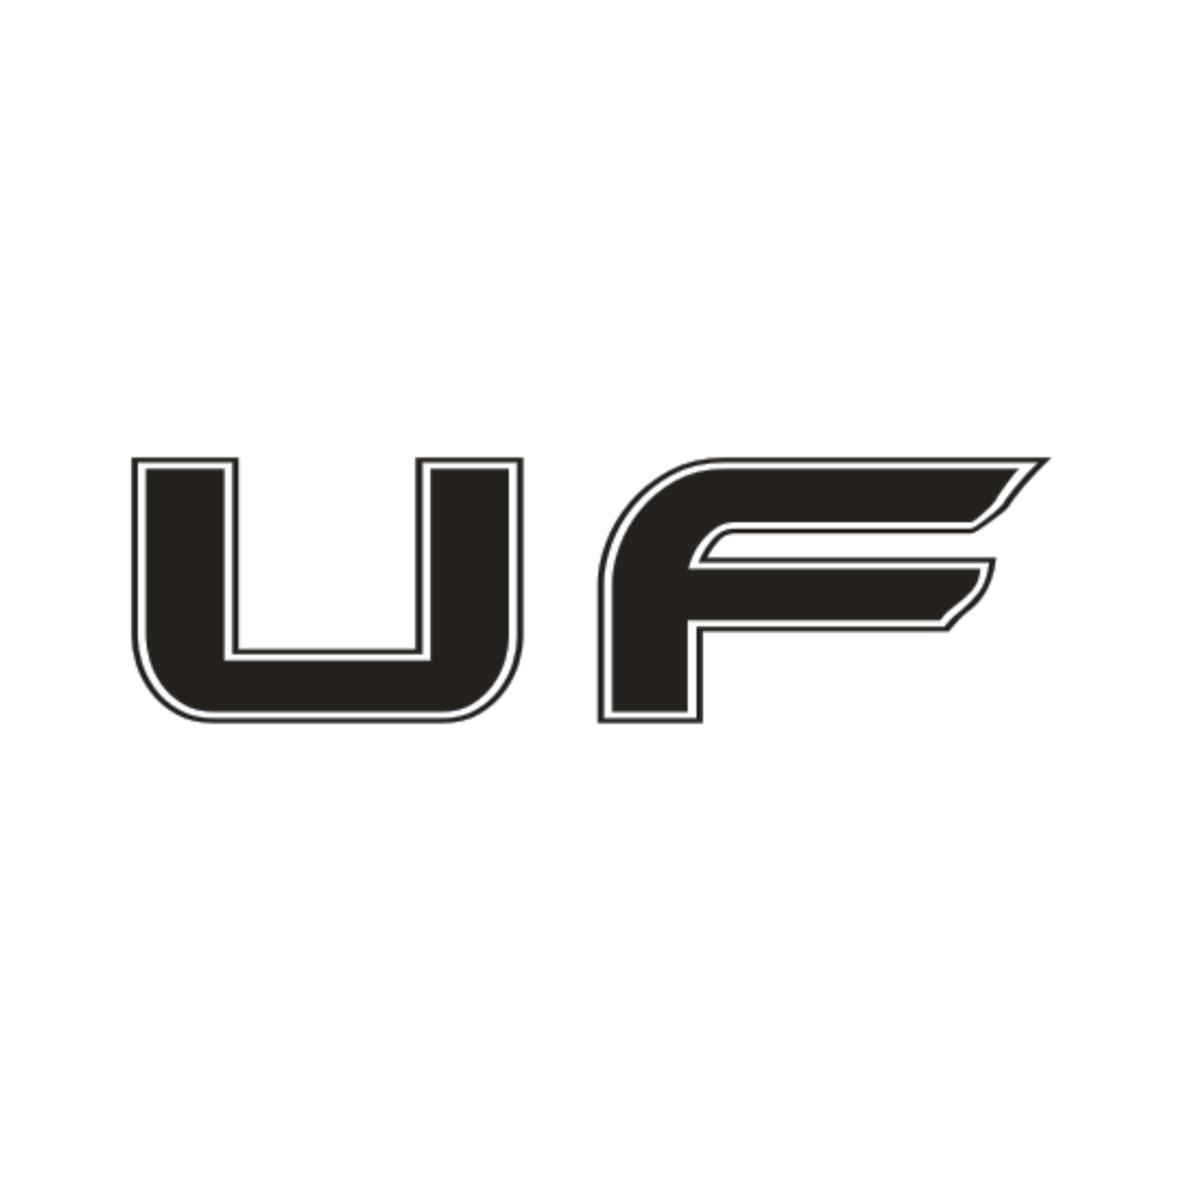 UF图形防护面罩商标转让费用买卖交易流程